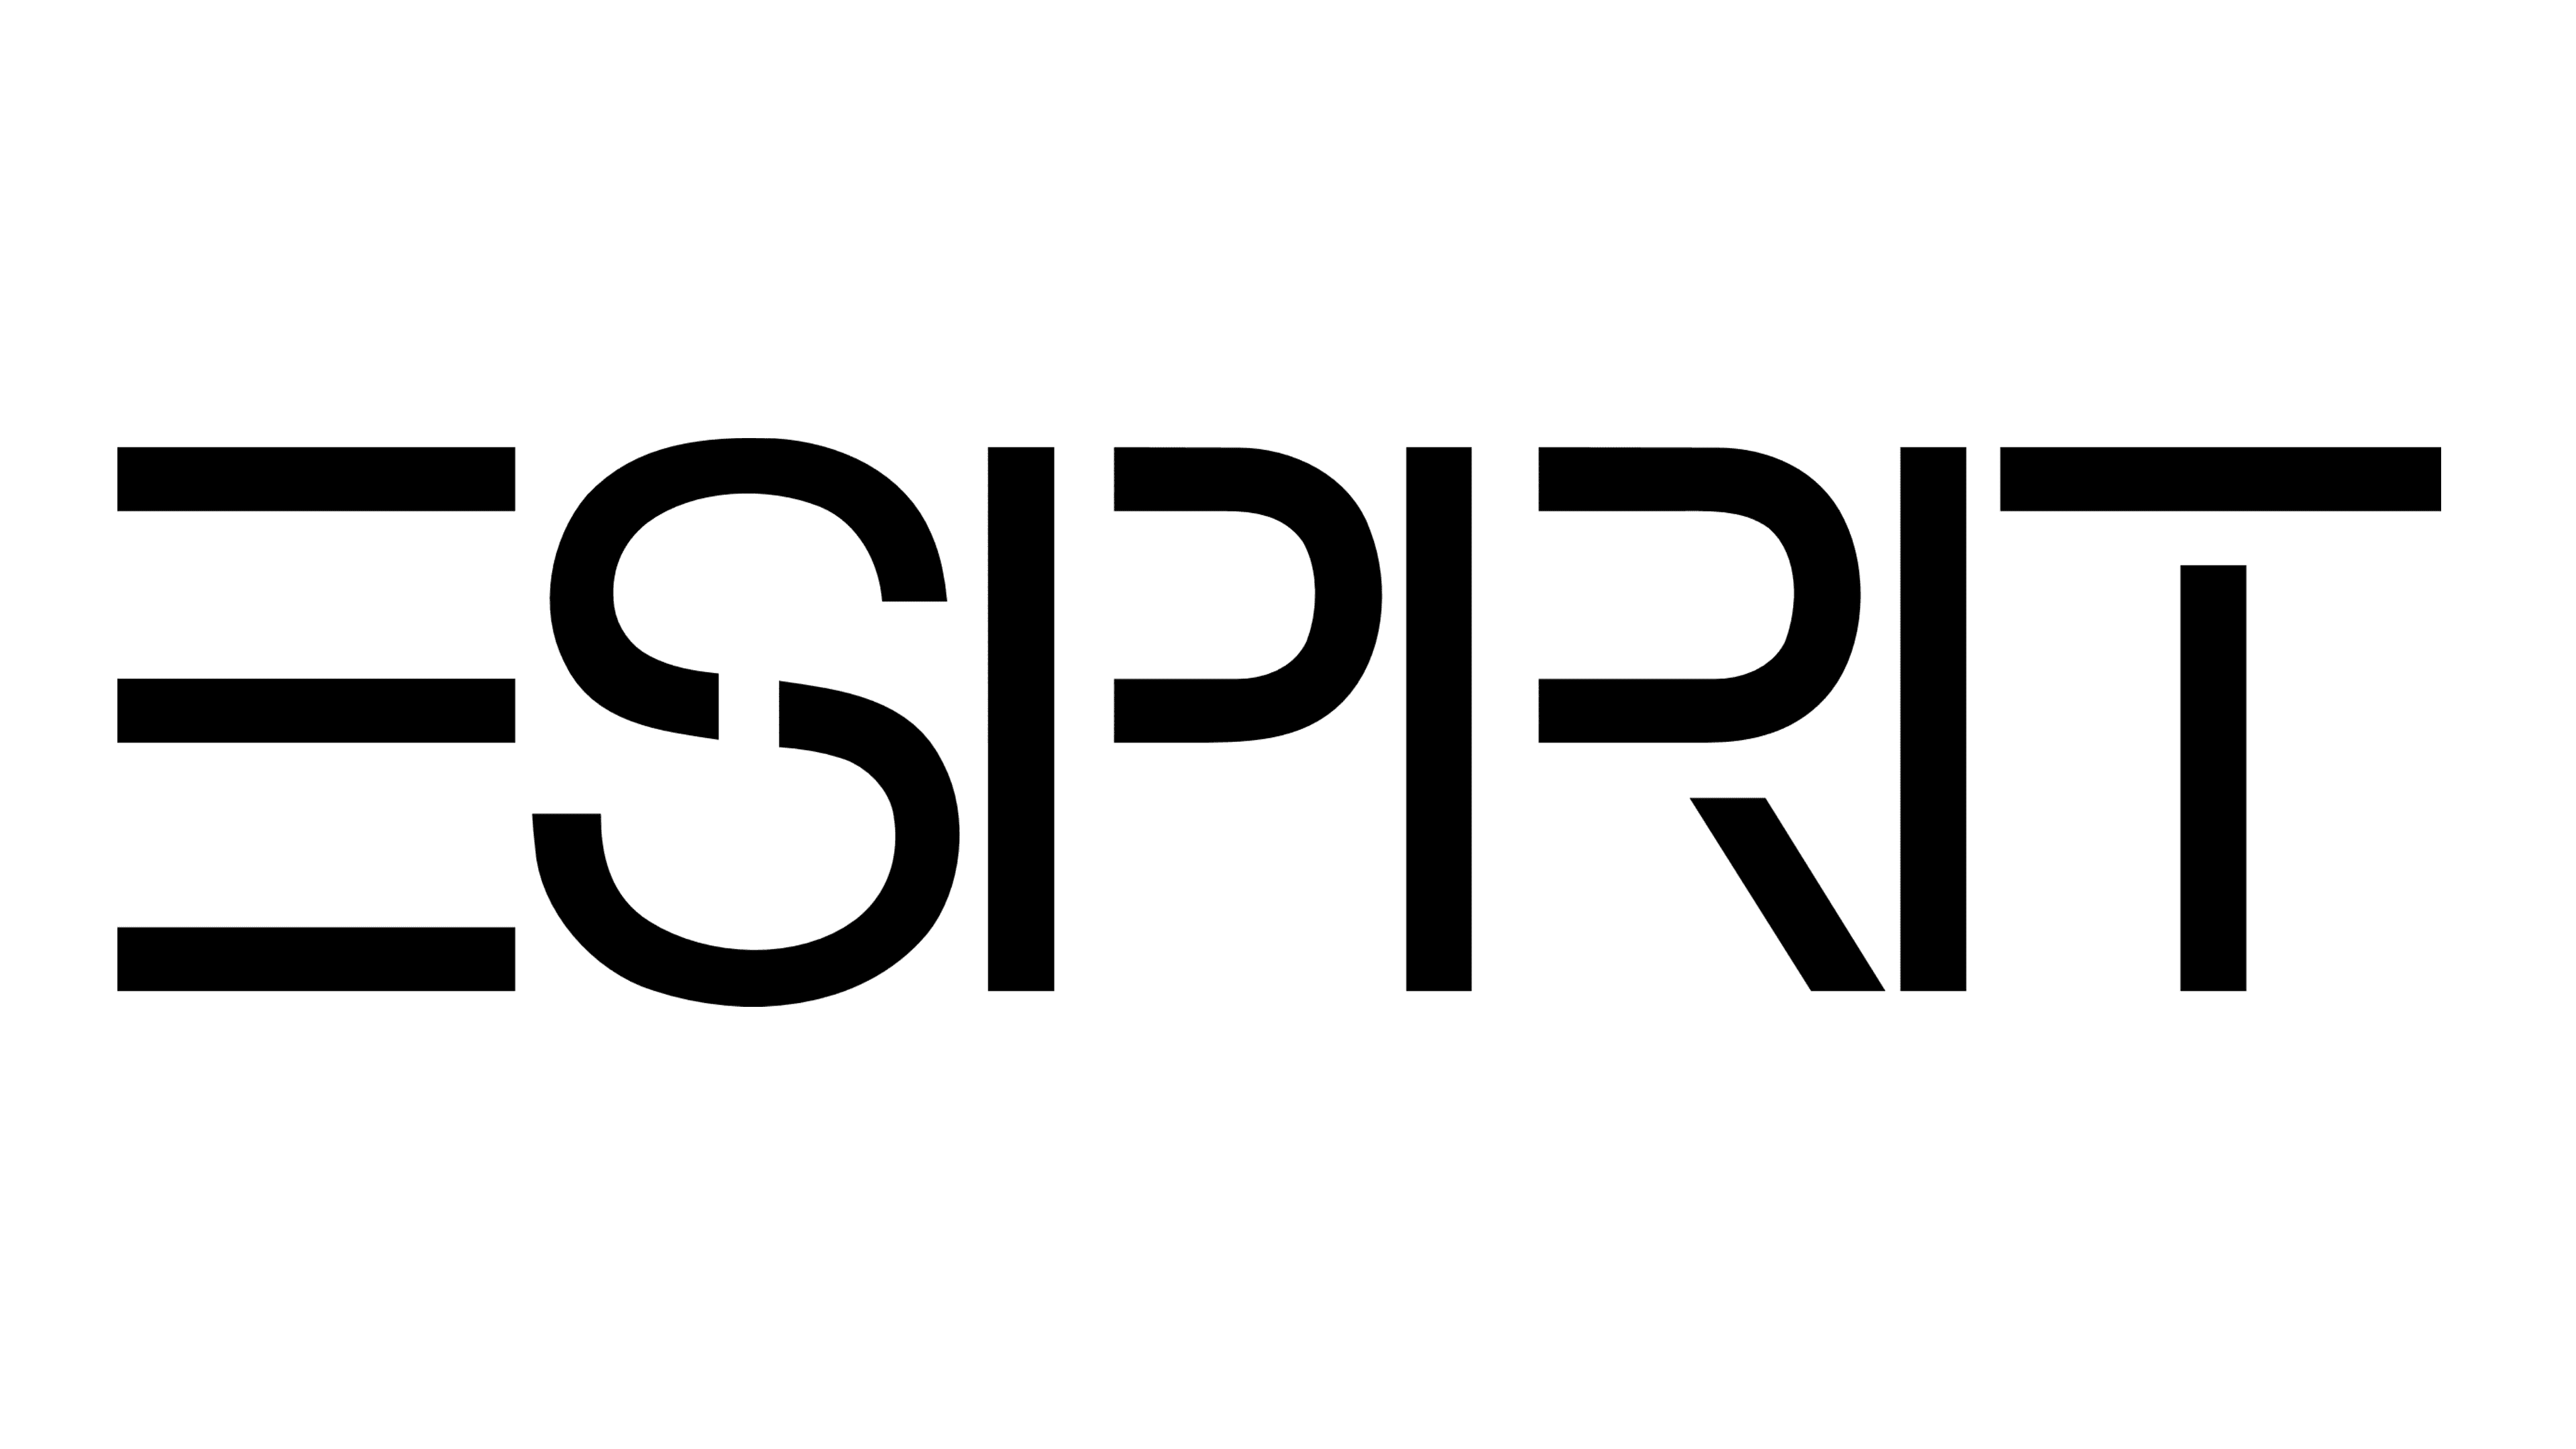 eer kristal voordeel Esprit Logo and symbol, meaning, history, PNG, brand